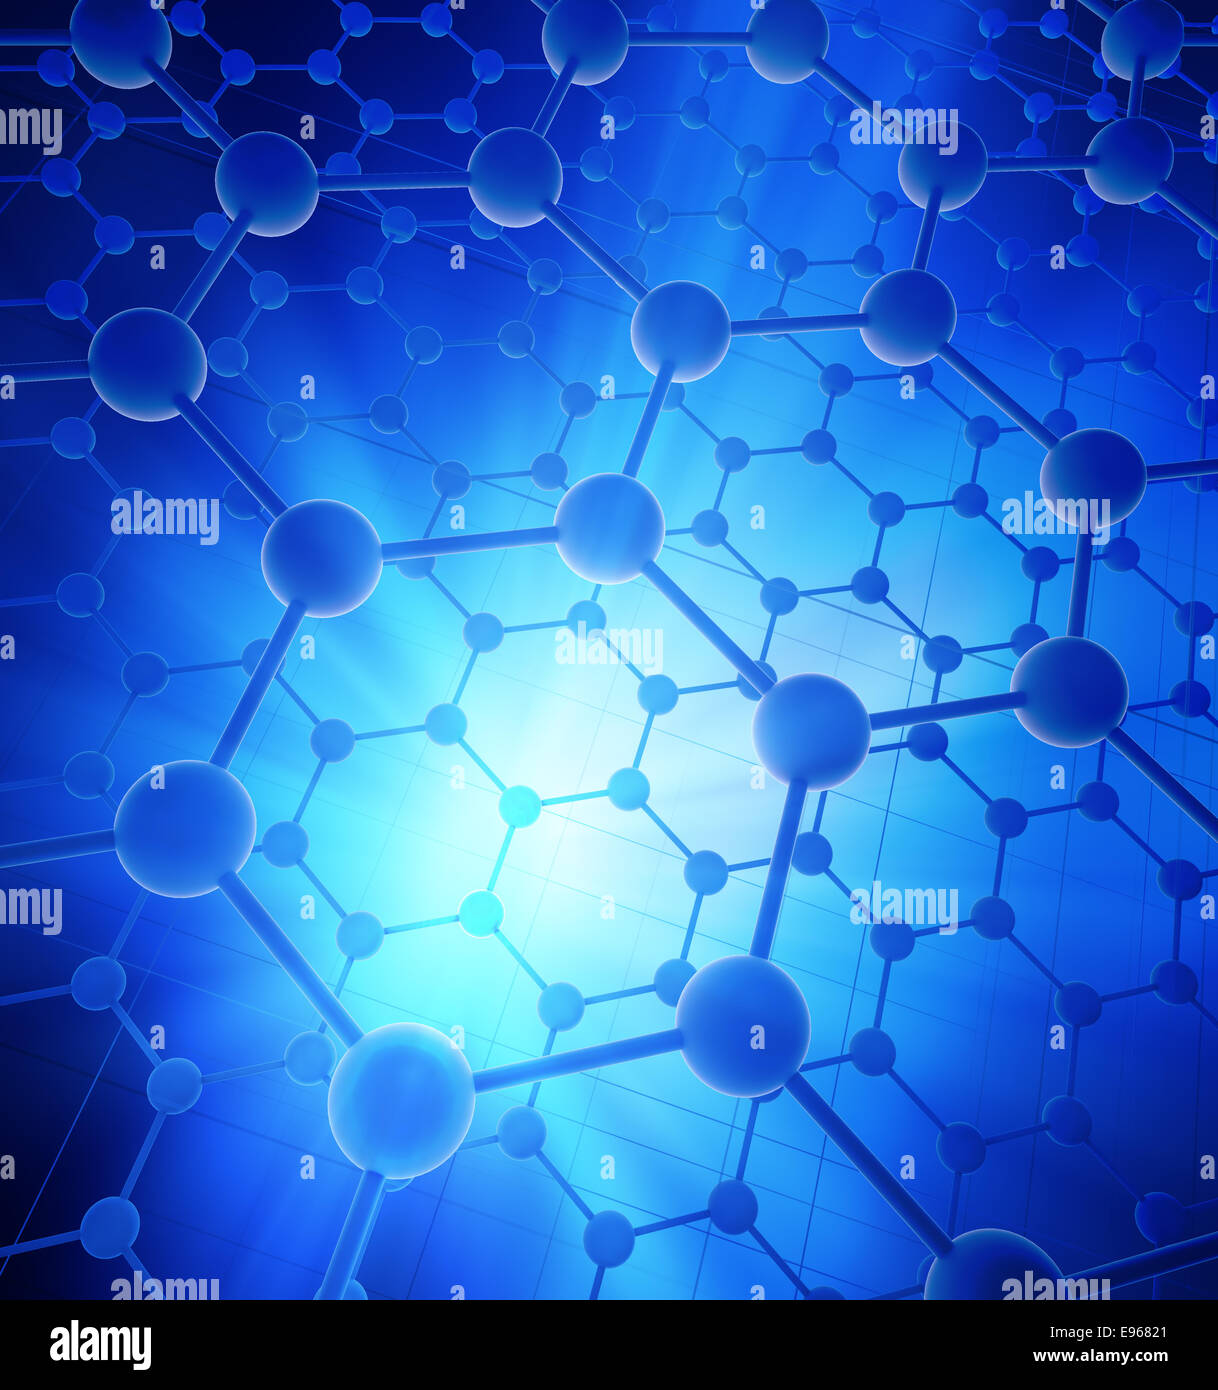 Graphen Atomstruktur - Nanotechnologie Hintergrund illustration Stockfoto